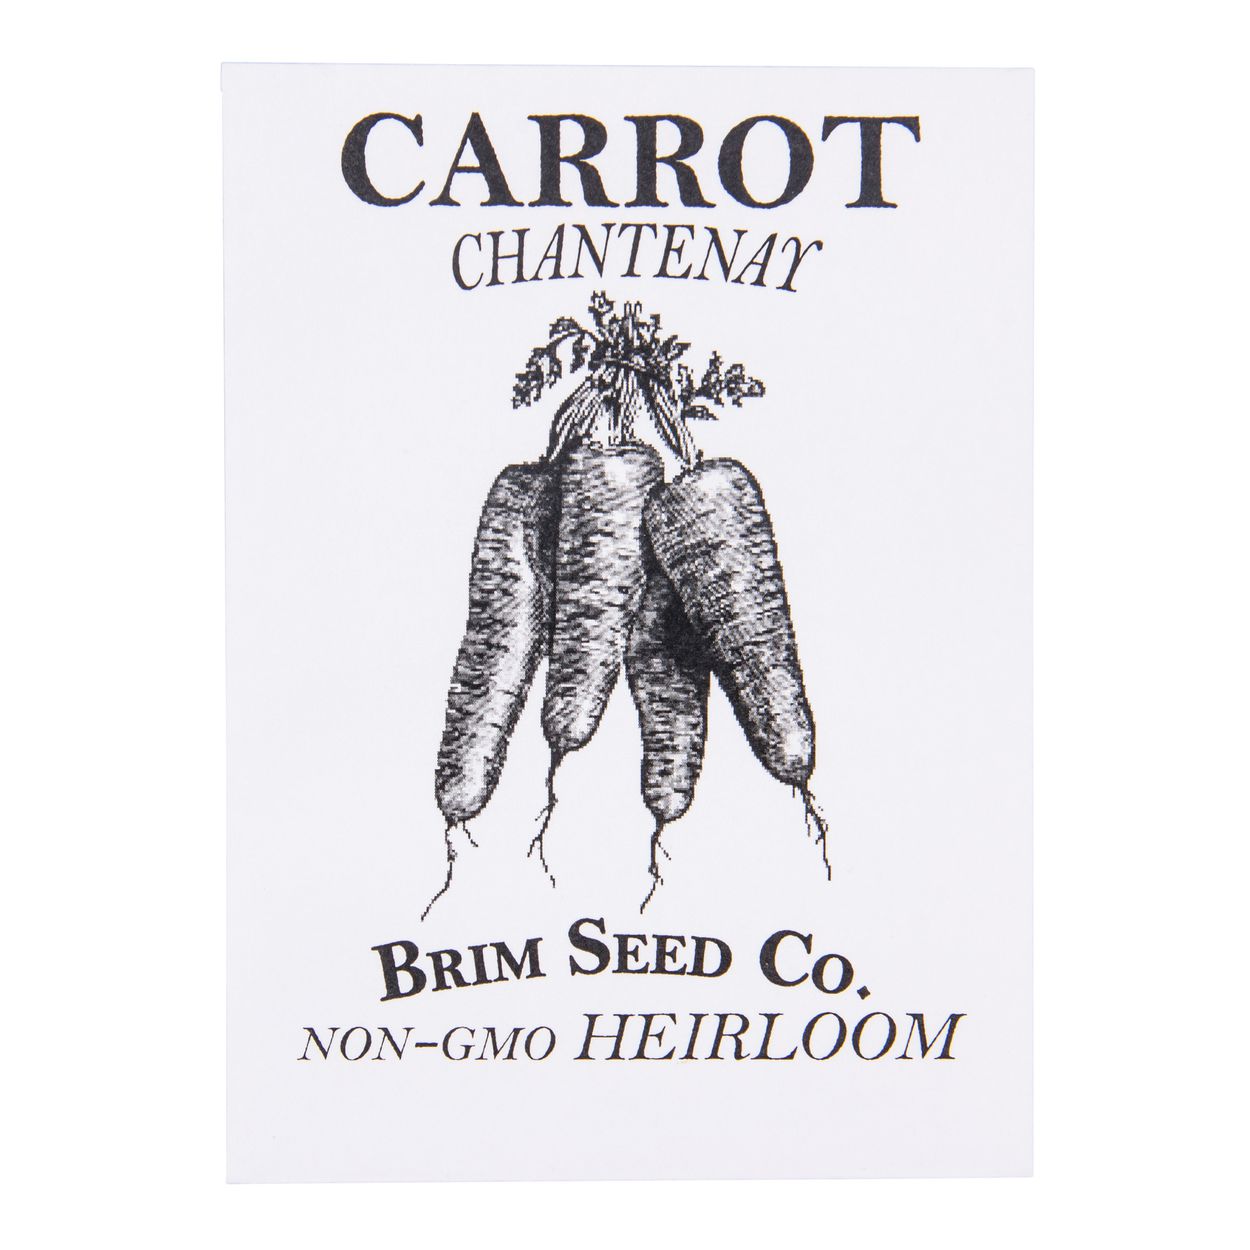 Brim Seed Co. - Chantenay Carrot Heirloom Seed